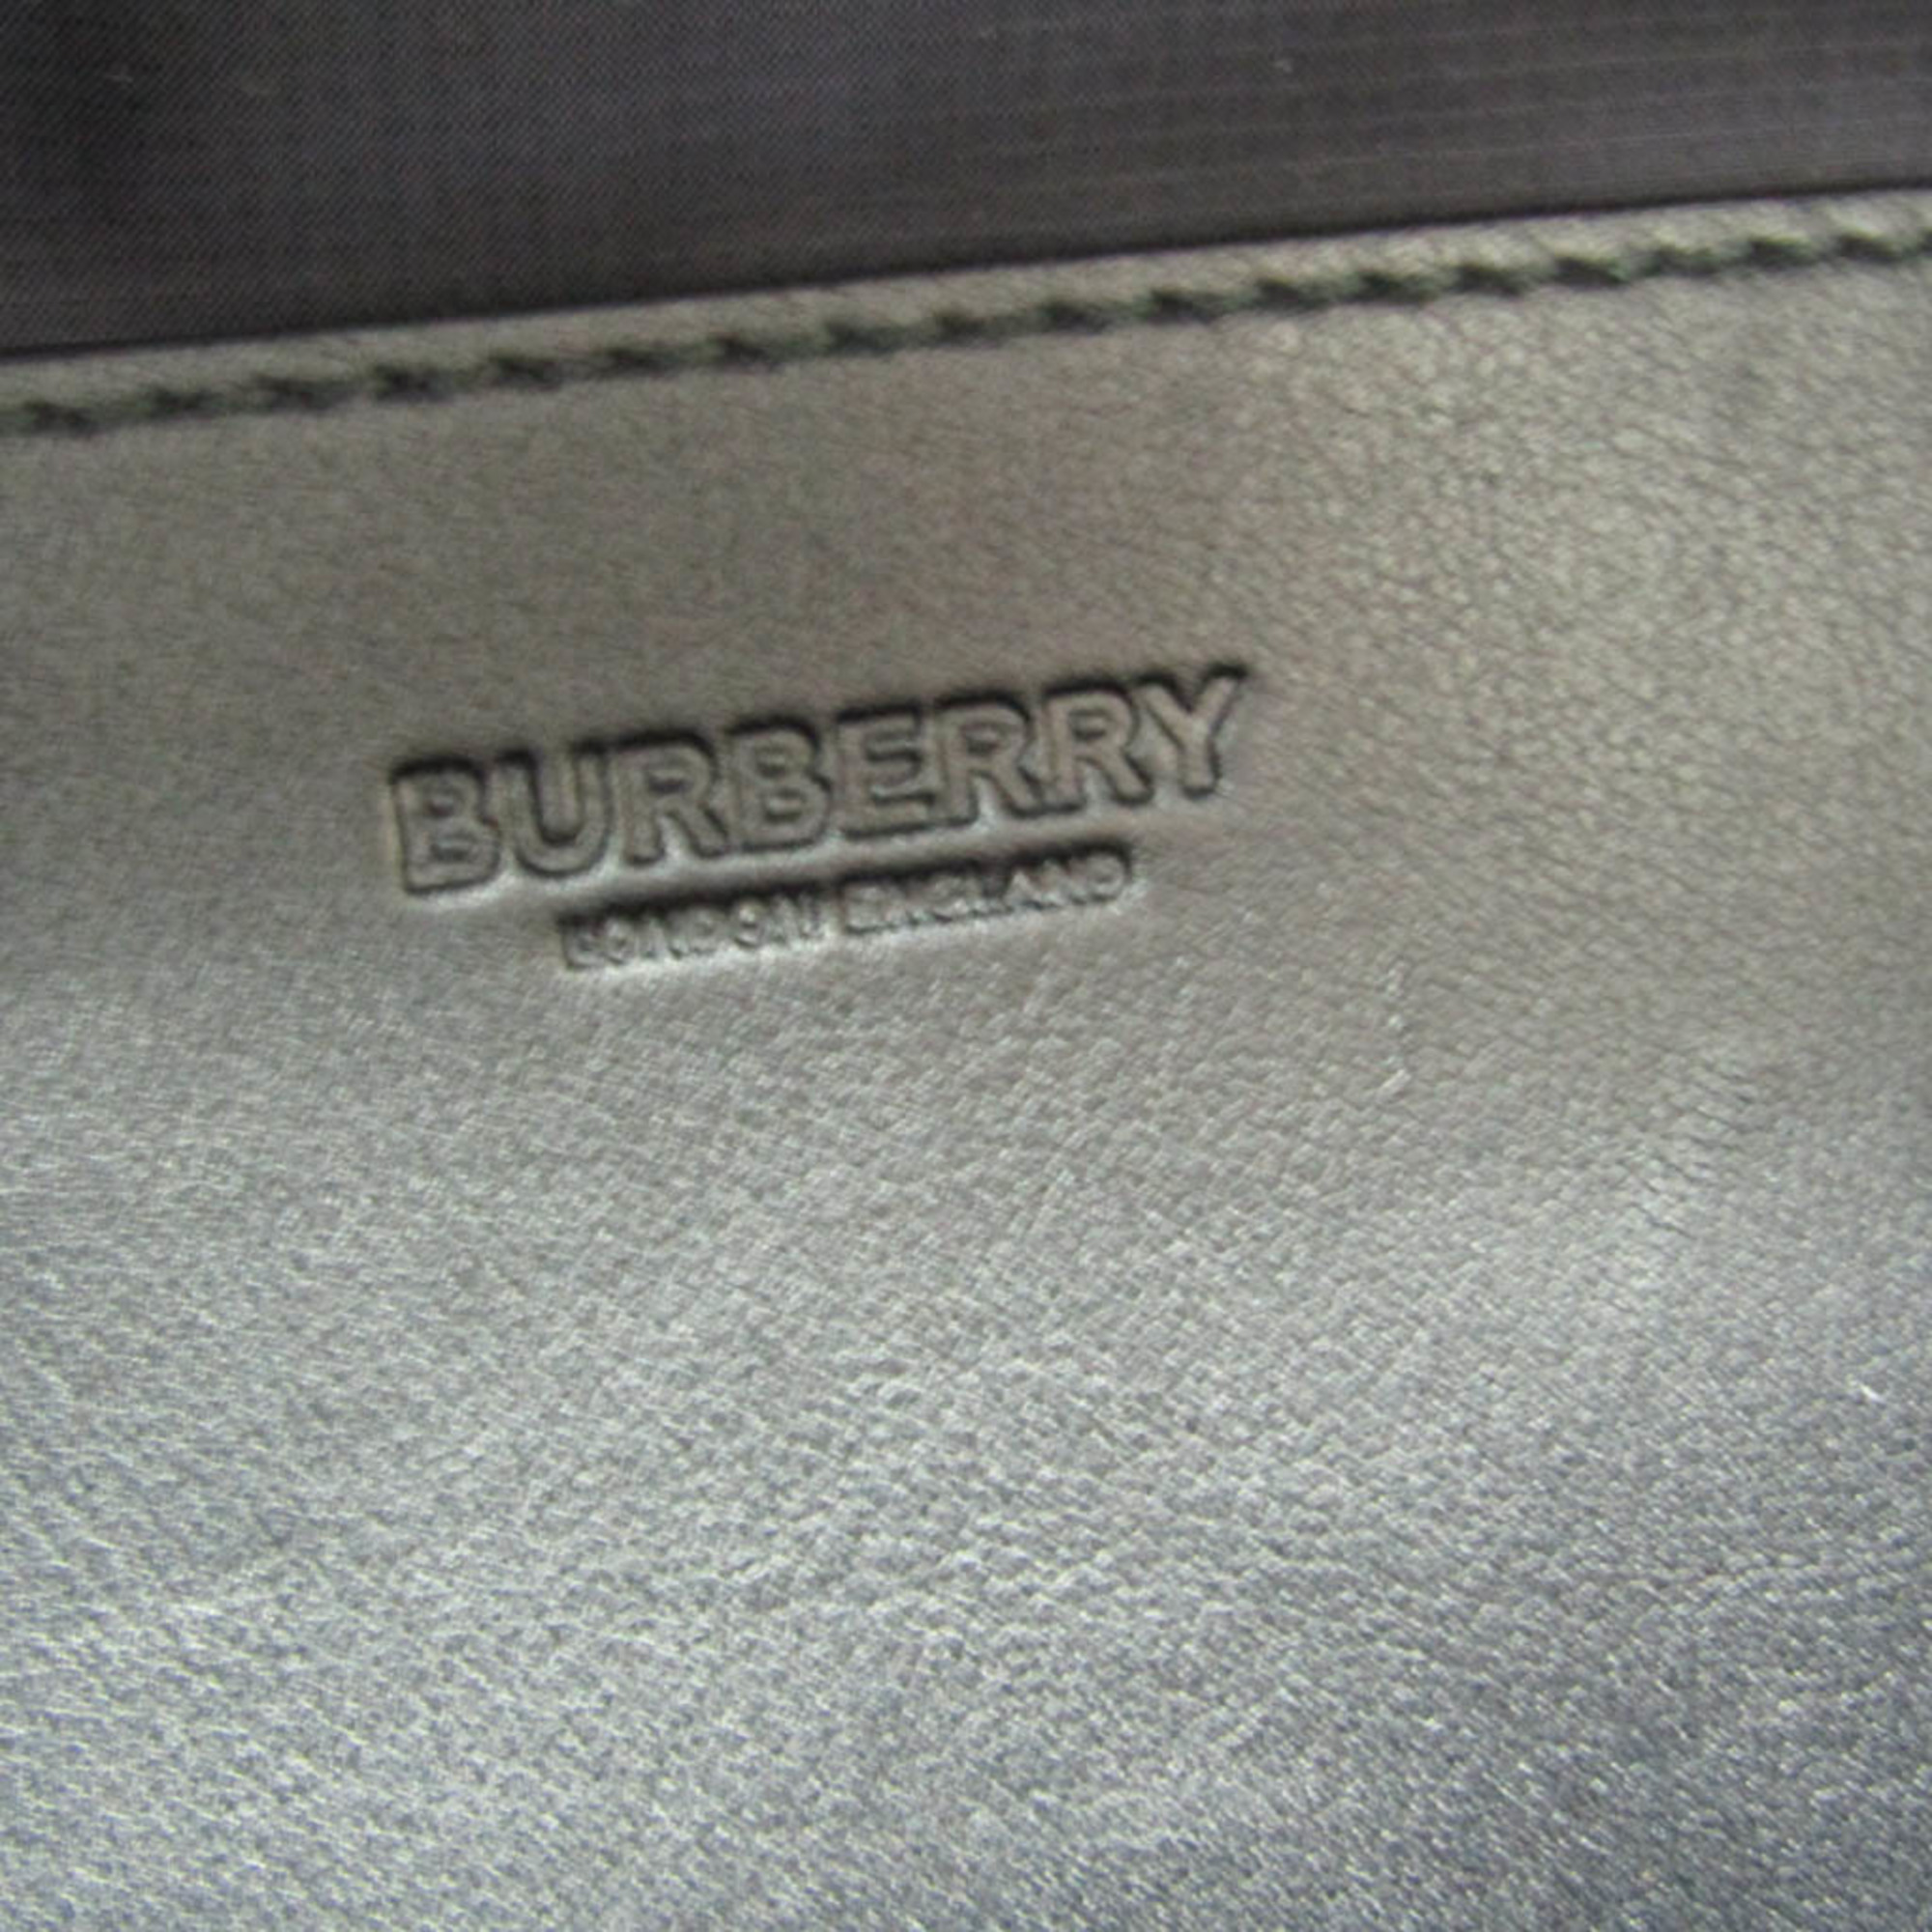 Burberry Checked Cotton Sonny Bum Bag 8049113 Men,Women Nylon Canvas,Leather Fanny Pack,Sling Bag Black,Blue,Gray